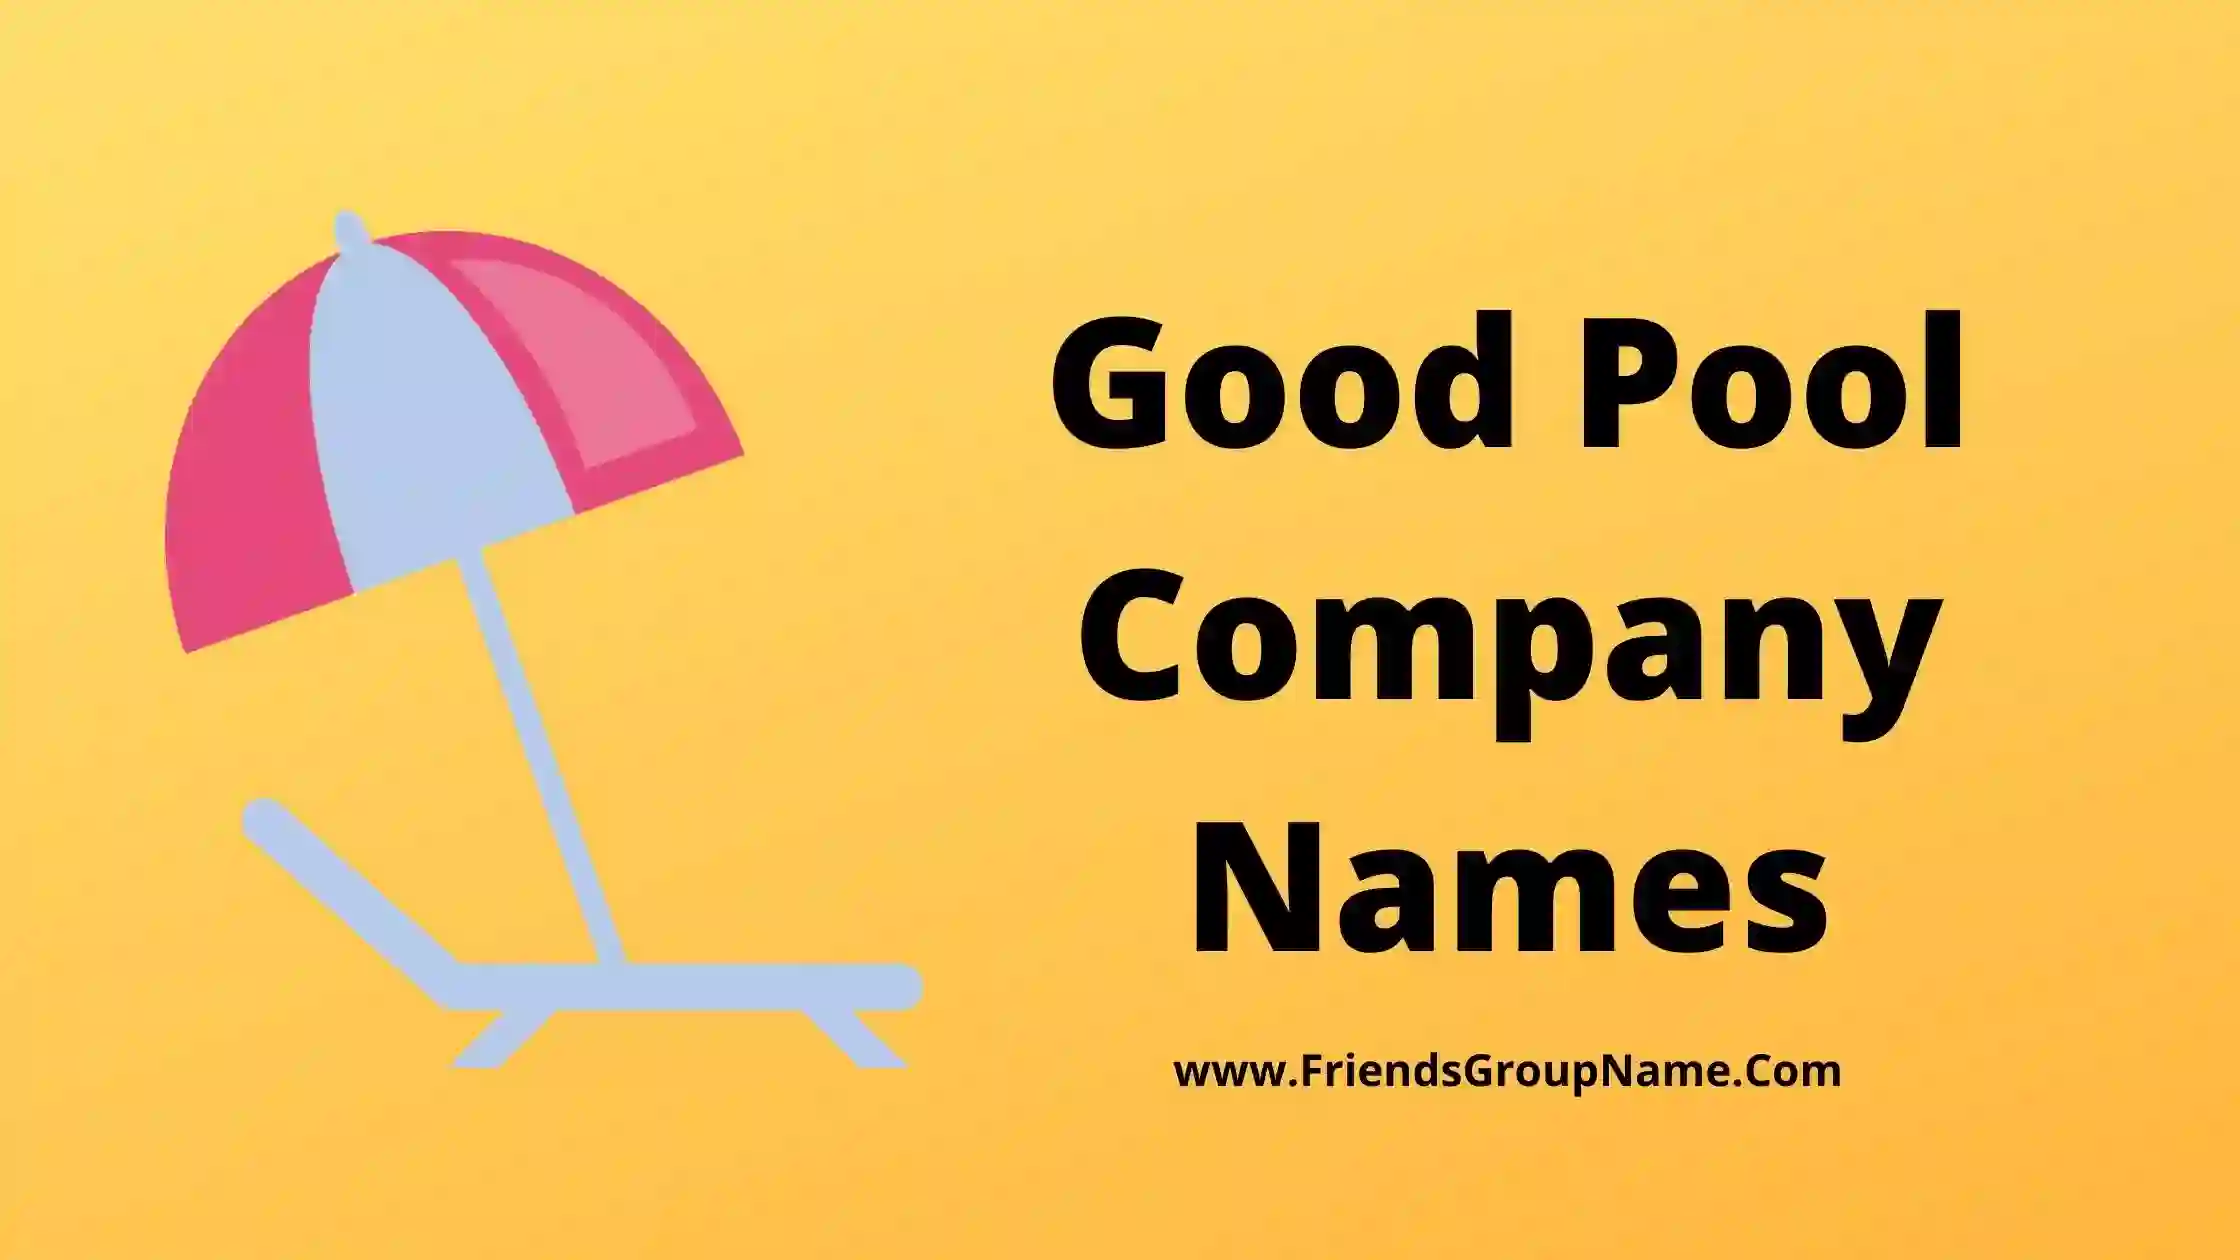 Good Pool Company Names